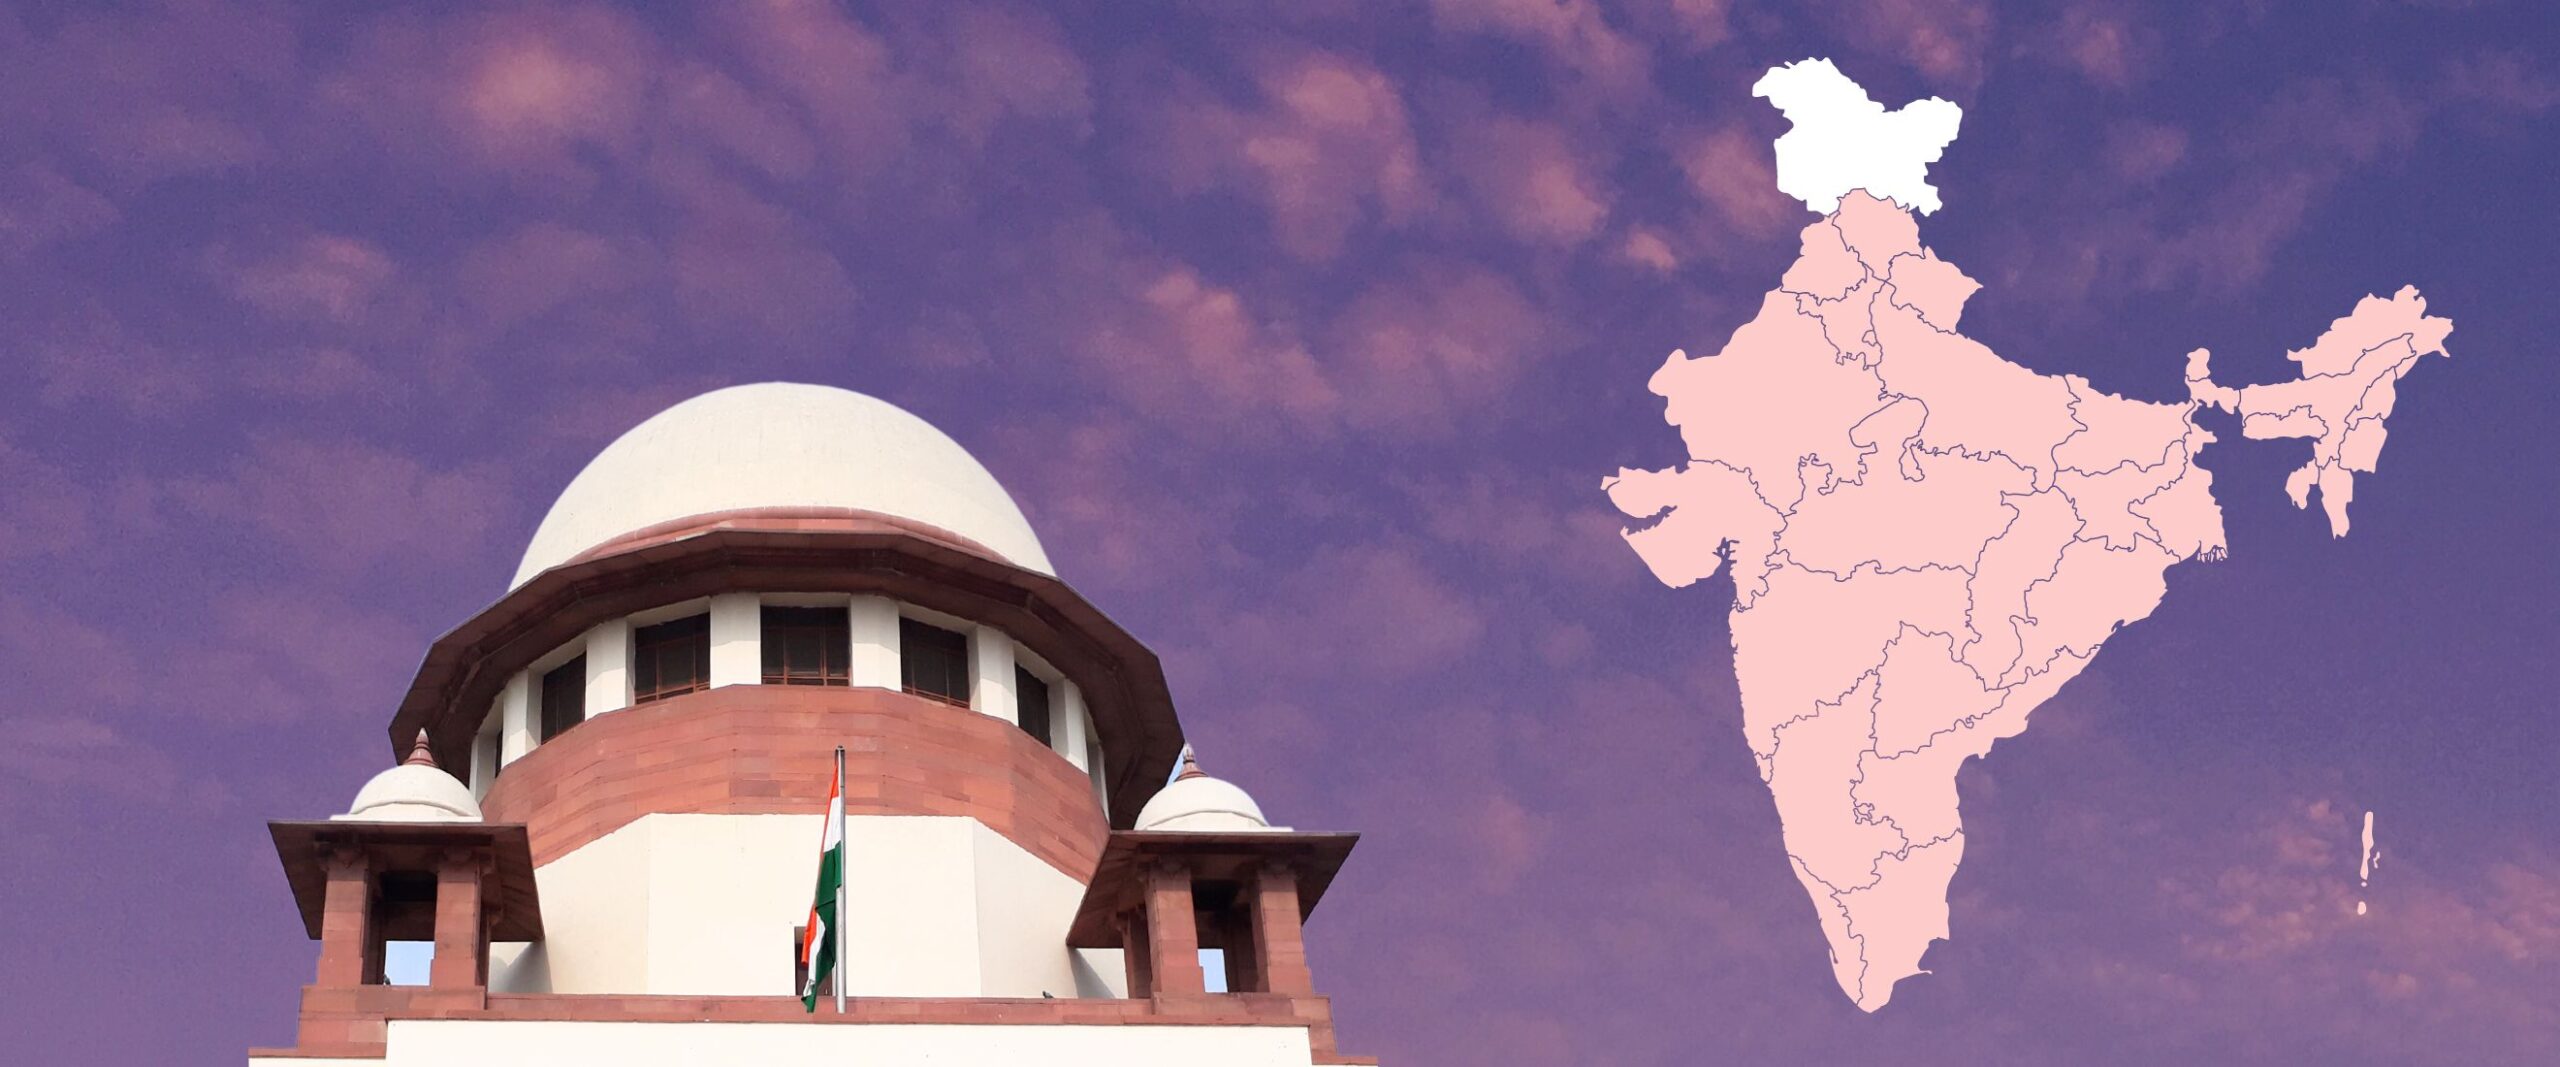 Supreme Court Article 370 judgements